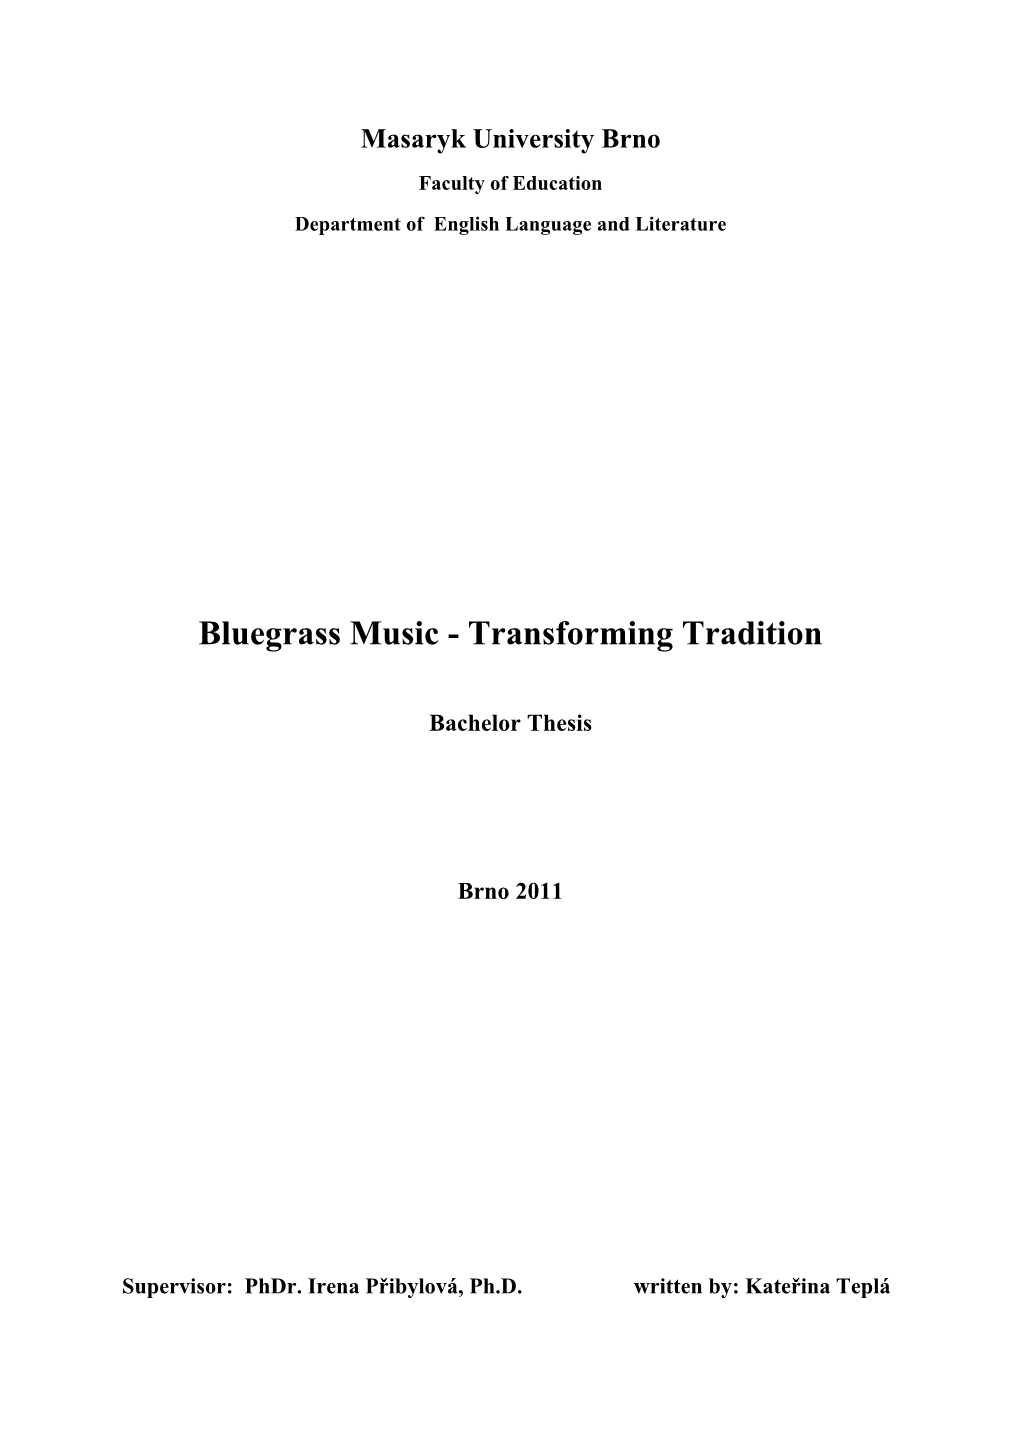 Bluegrass Music - Transforming Tradition